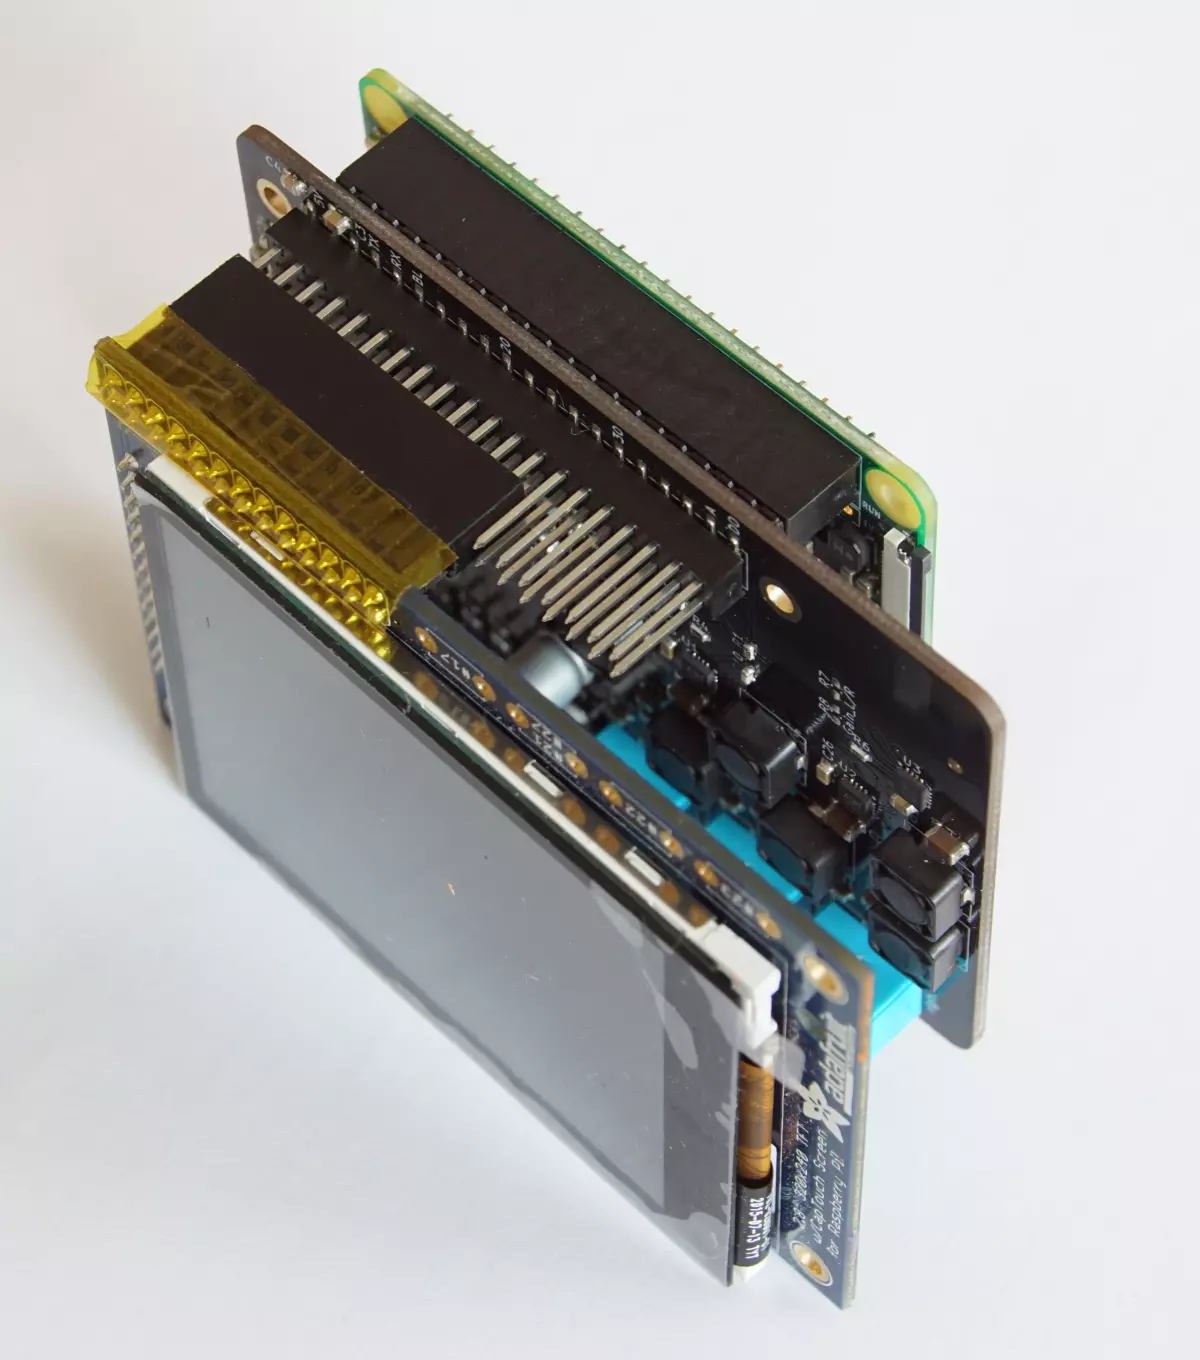 PiTFT, digitalrooster-mk3b and RaspberryPi  assembled